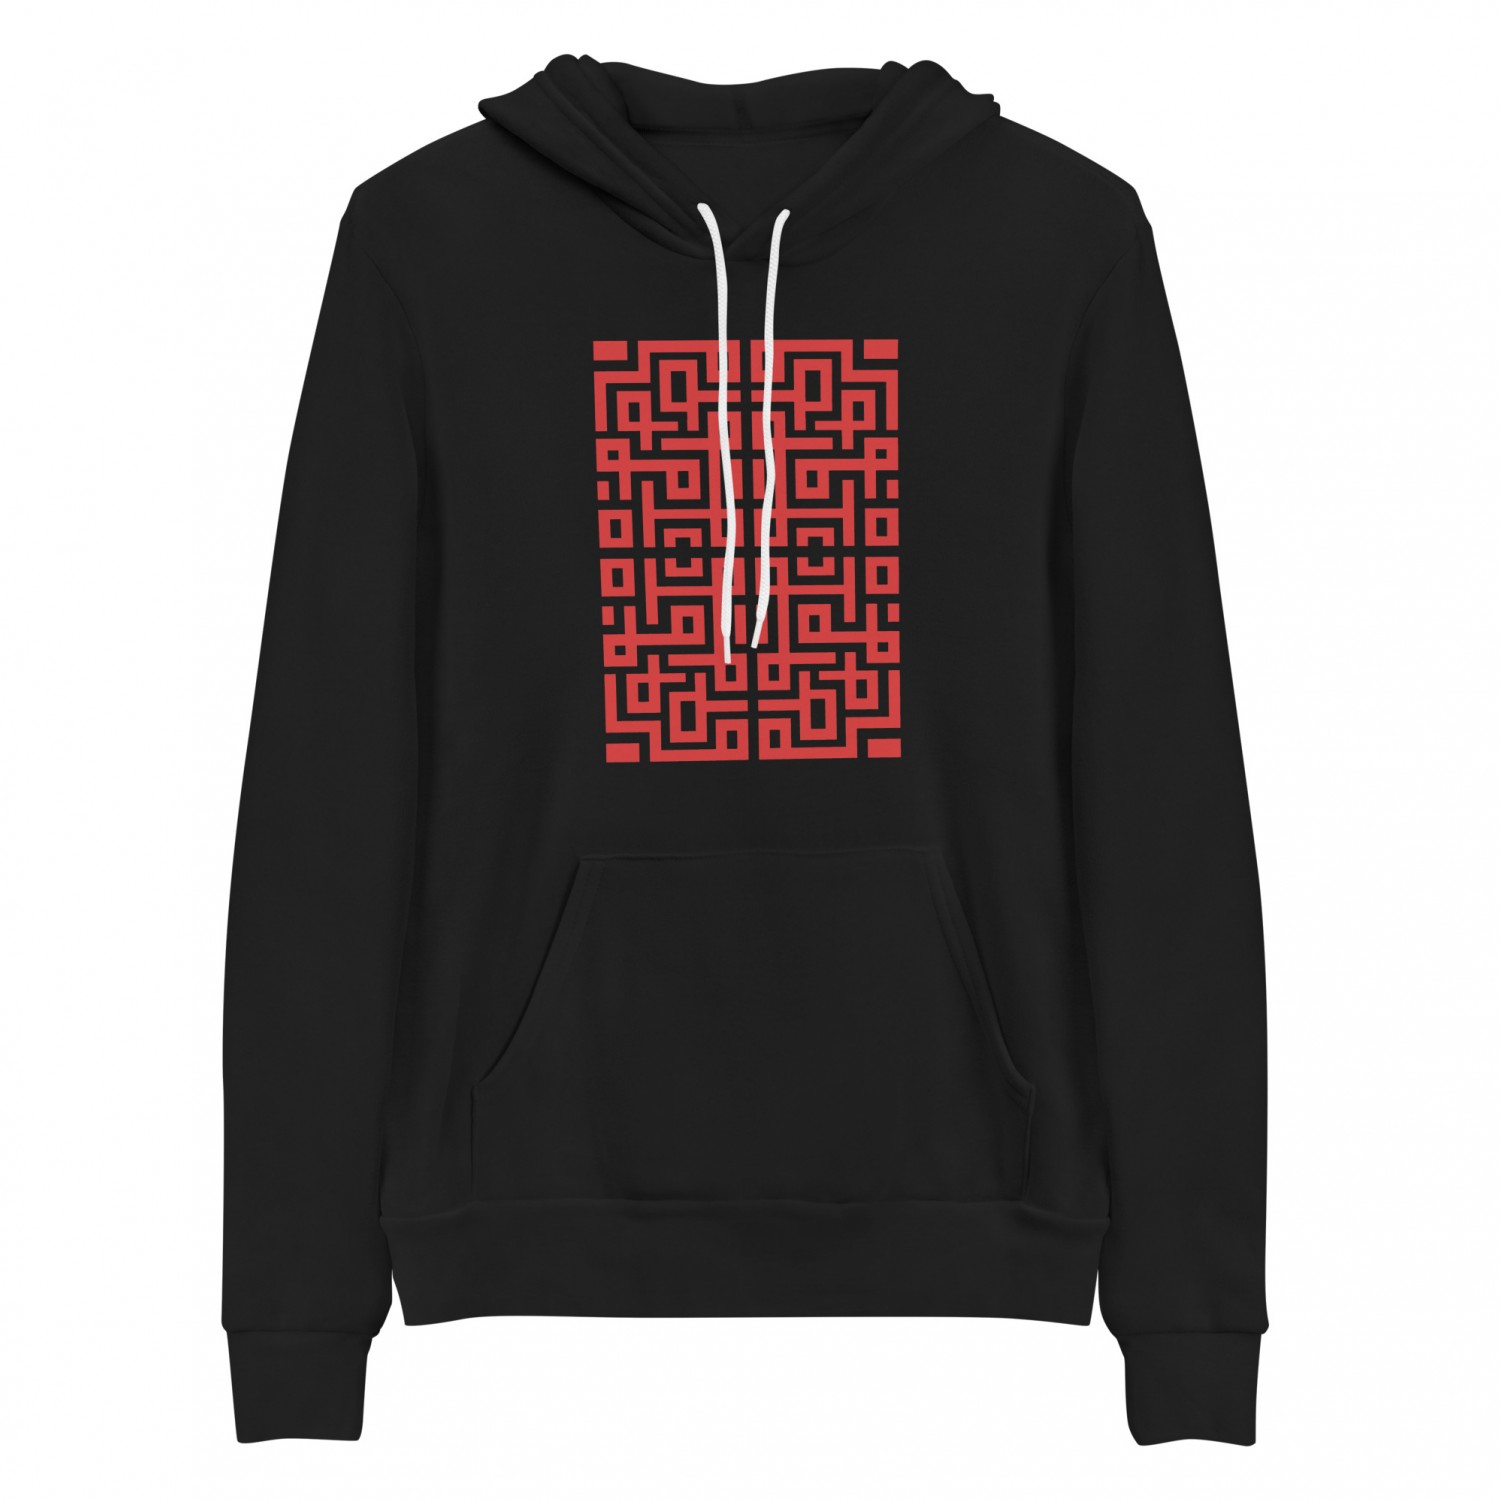 Buy a warm sweatshirt with a Slavic pattern